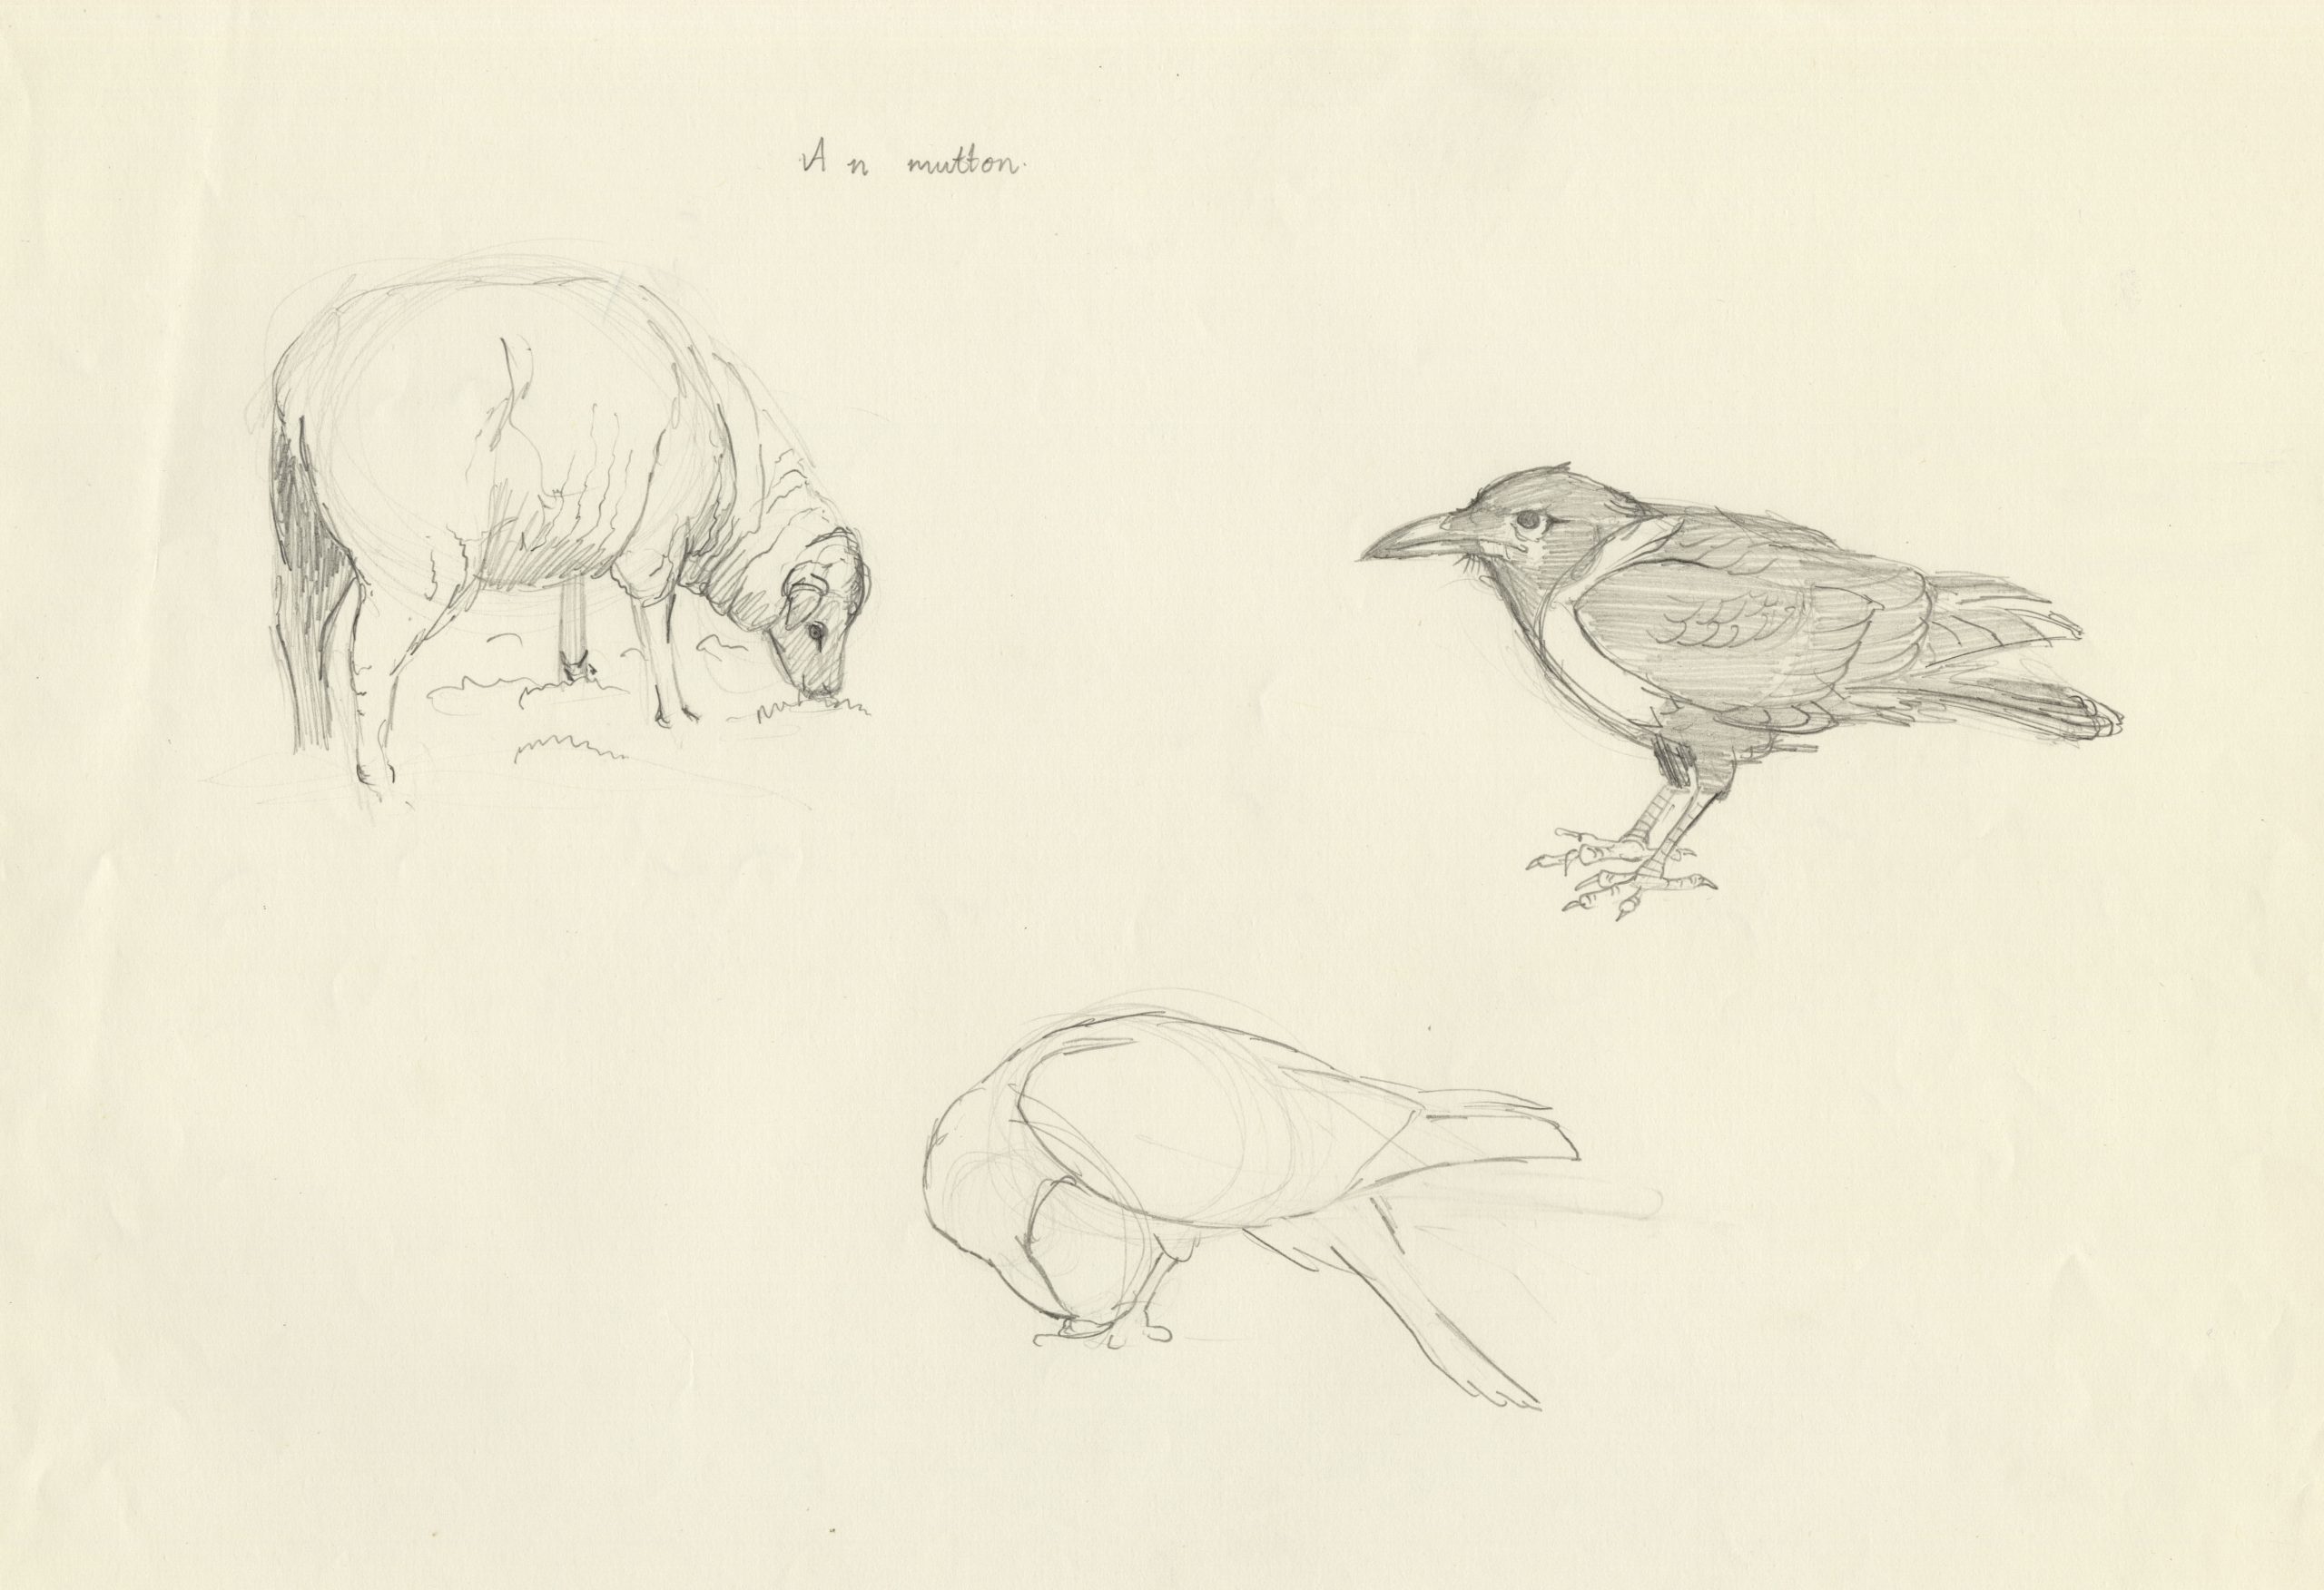 mutton & Cuthbert sketches